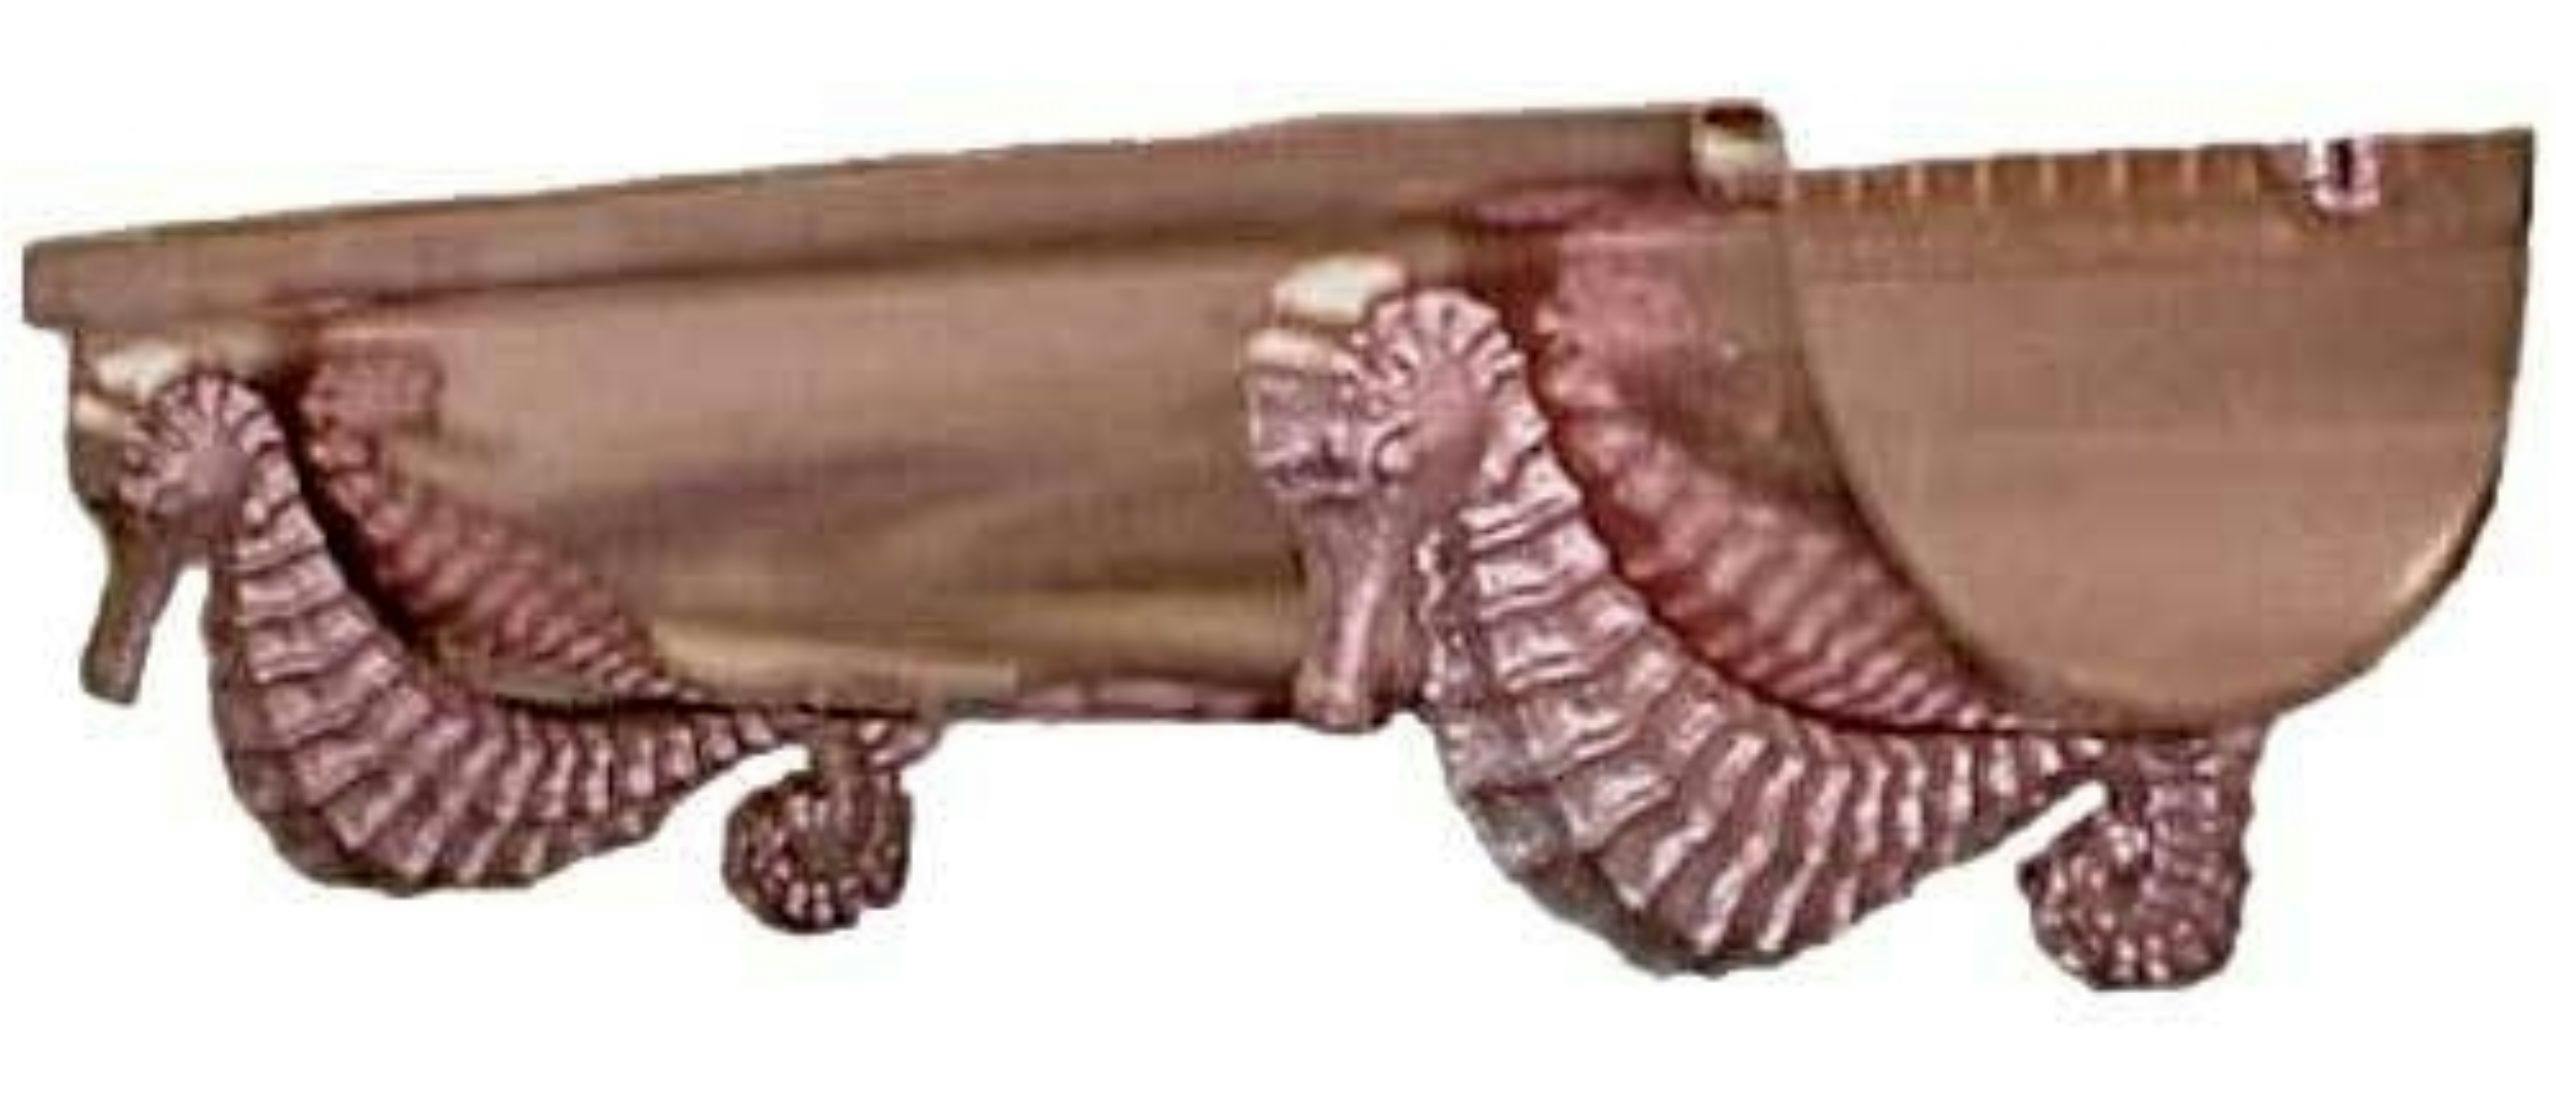 Copper gutter seahorse hanger